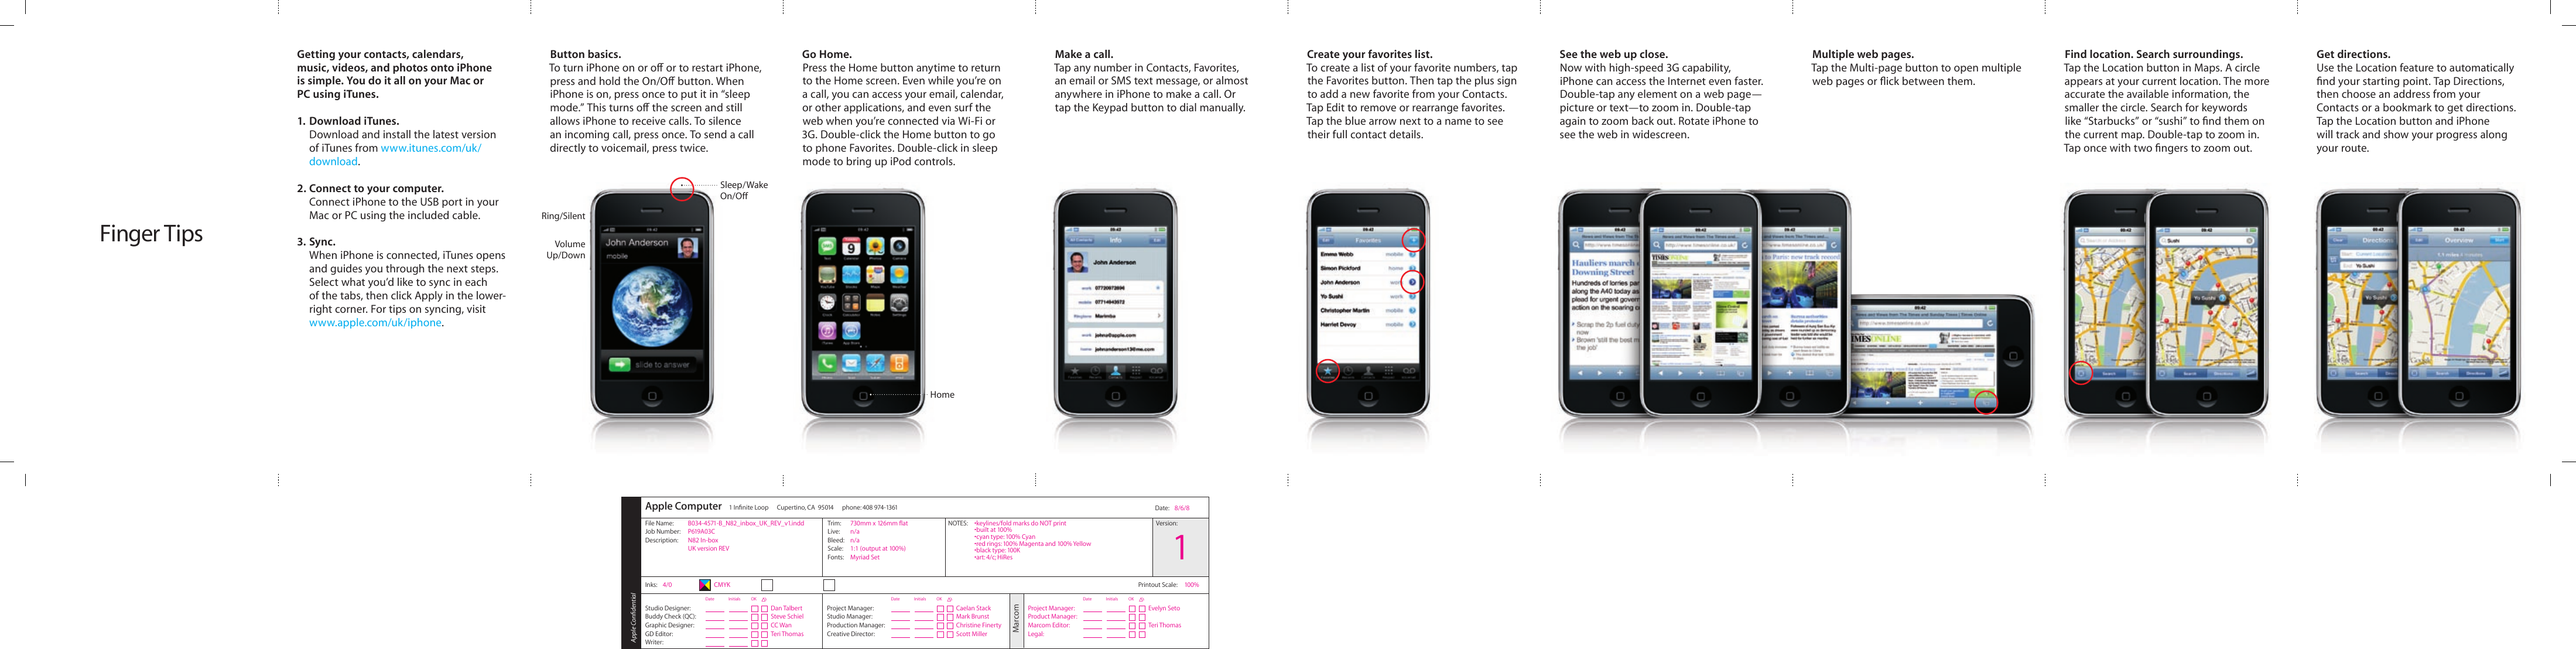 Page 1 of 2 - Apple IPhone(original) User Manual I Phone Finger Tips Guide-UK Guide B